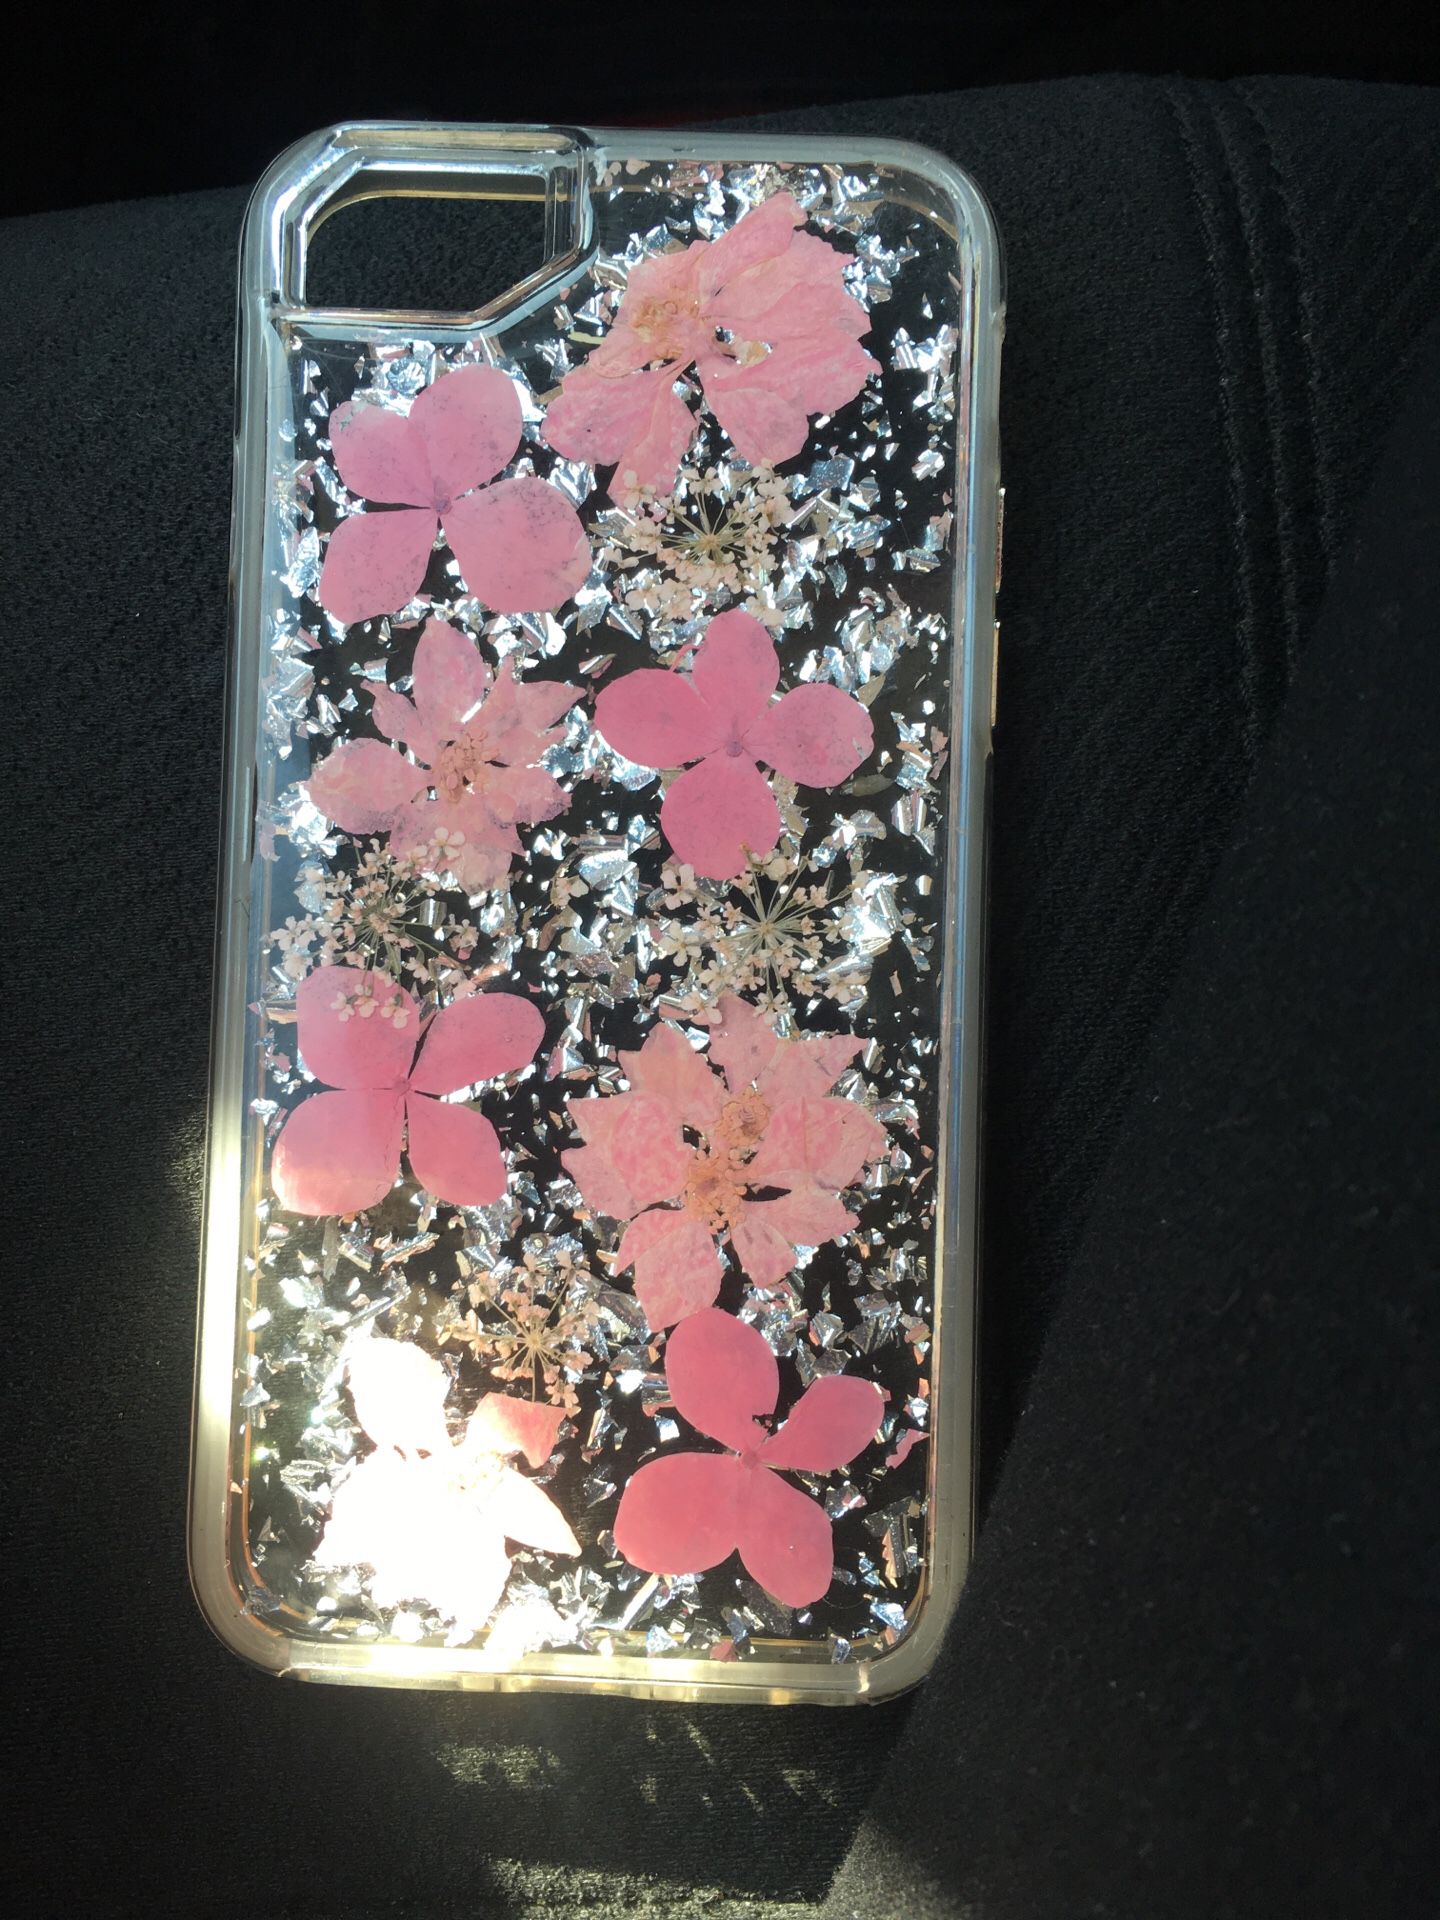 Beautiful IPhone 6 7 8 case!